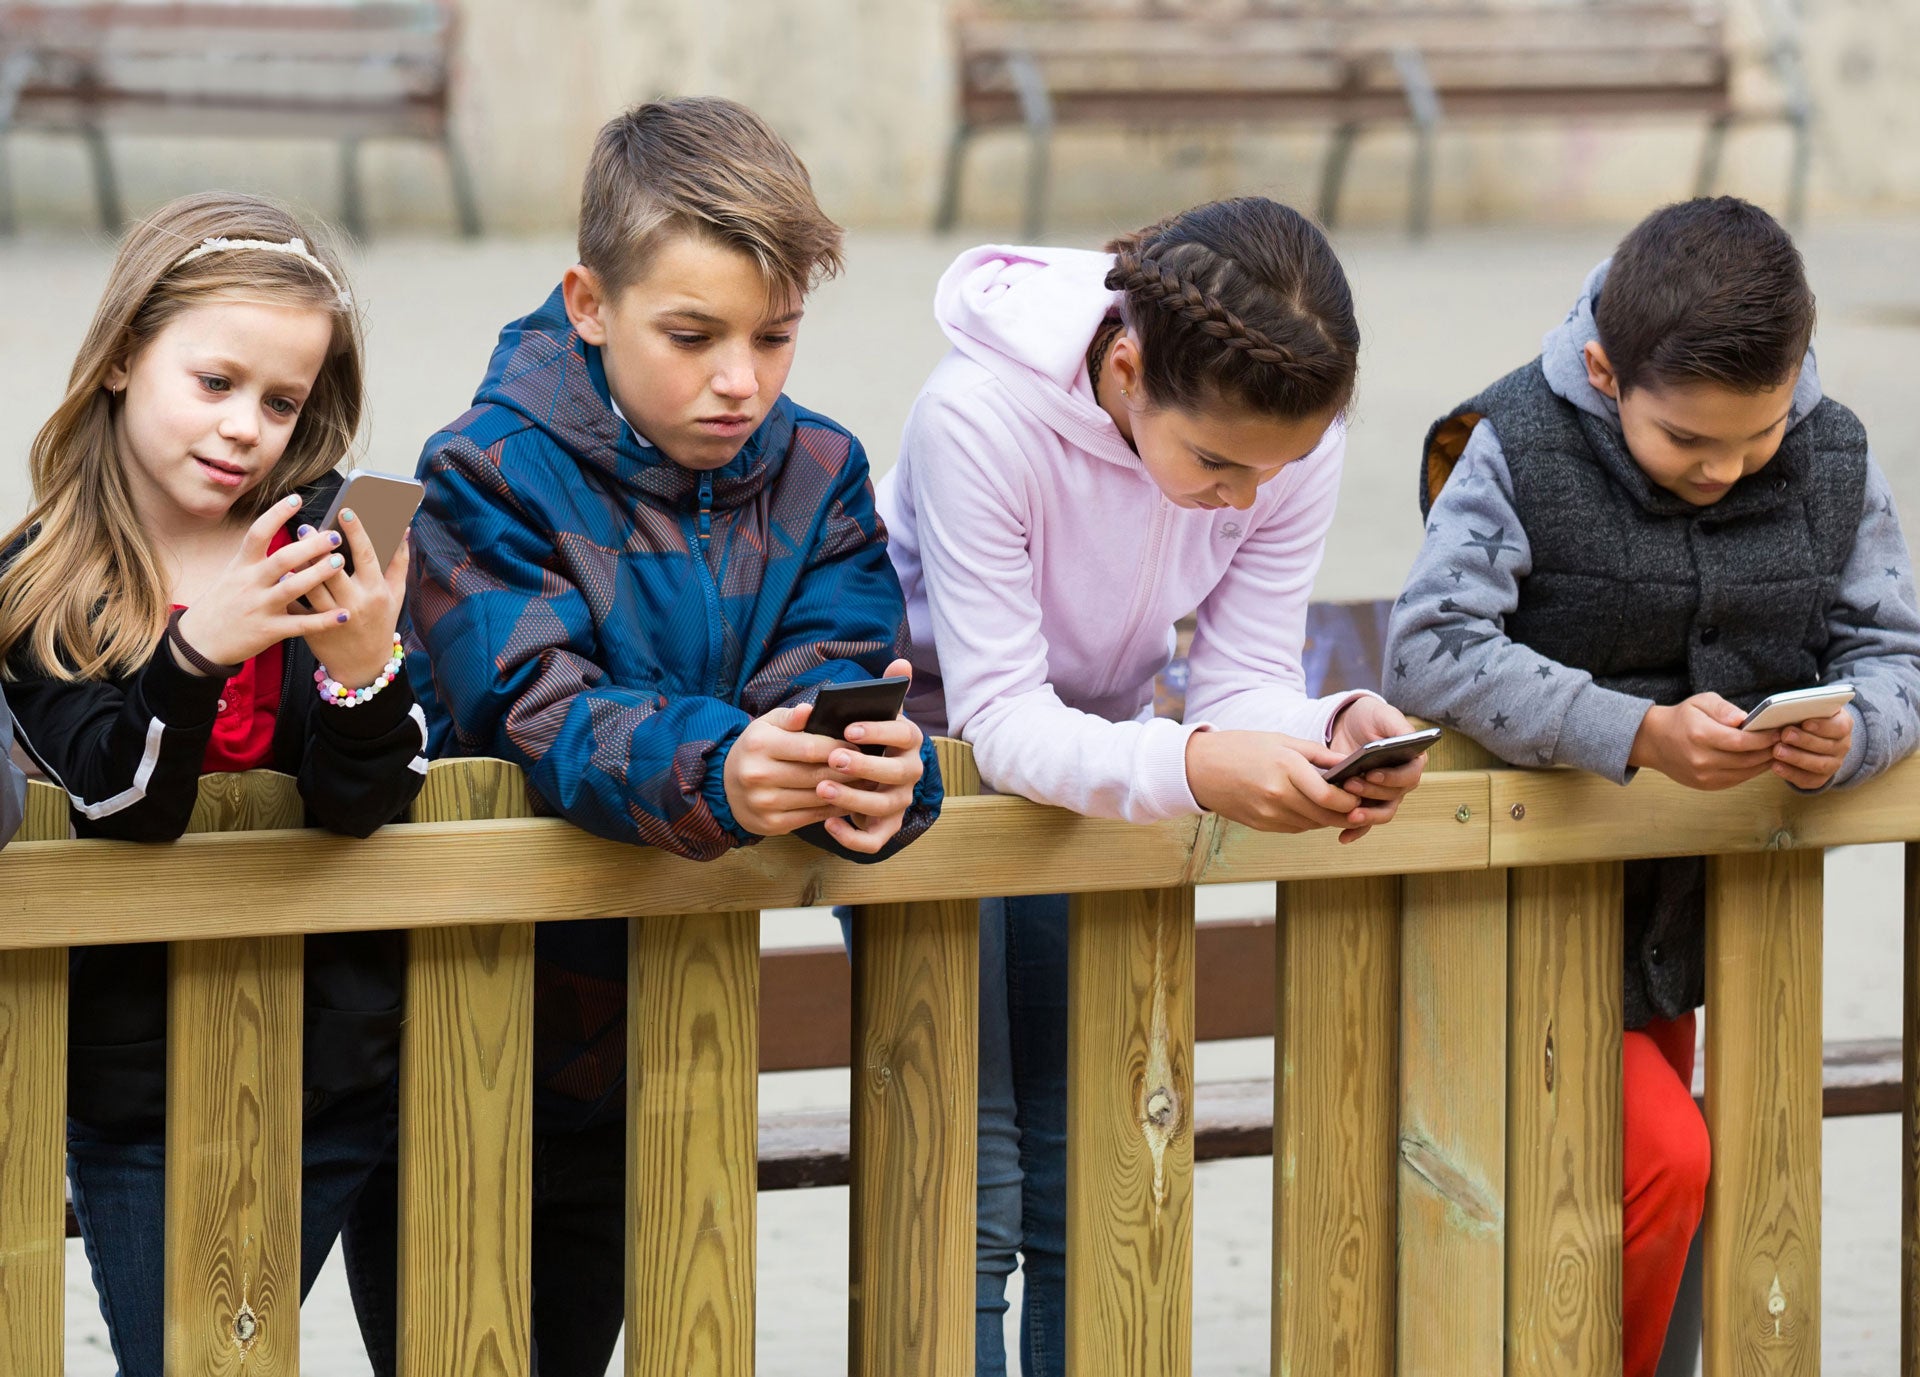 Smartphone addiction symptoms found in a quarter of children - Verdict